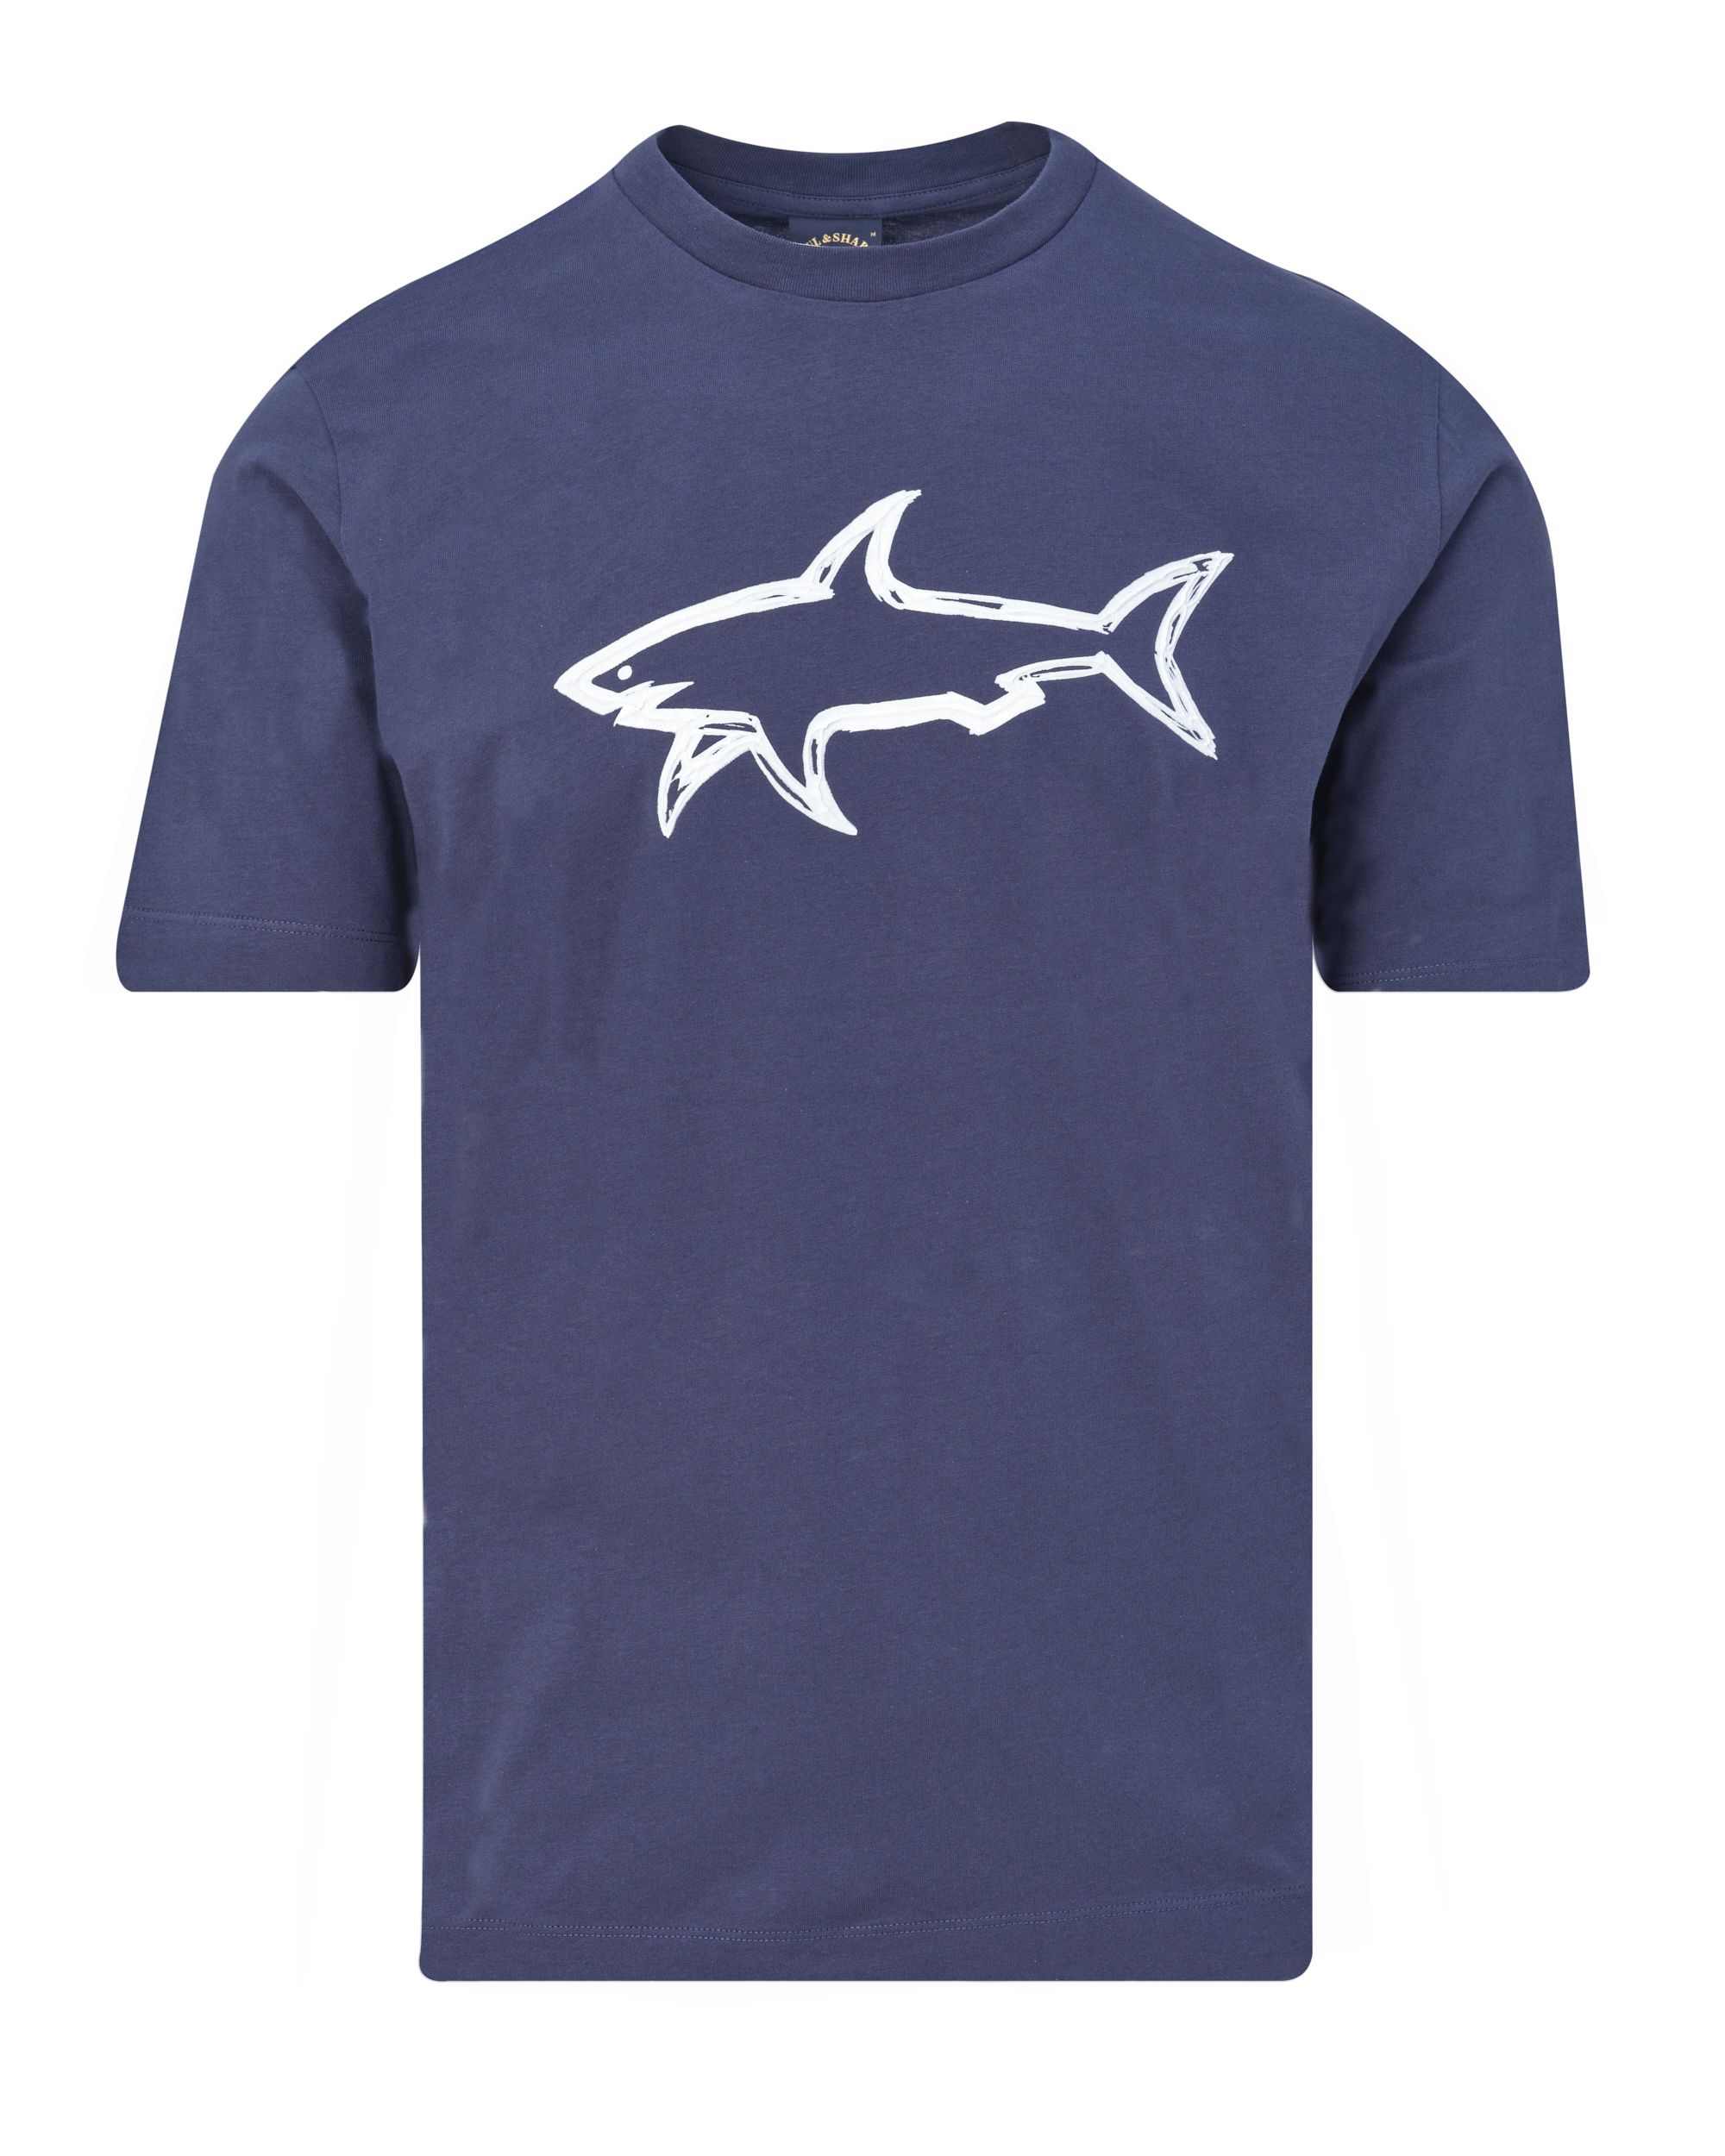 Paul & Shark T-shirt KM Donker blauw 083343-001-L